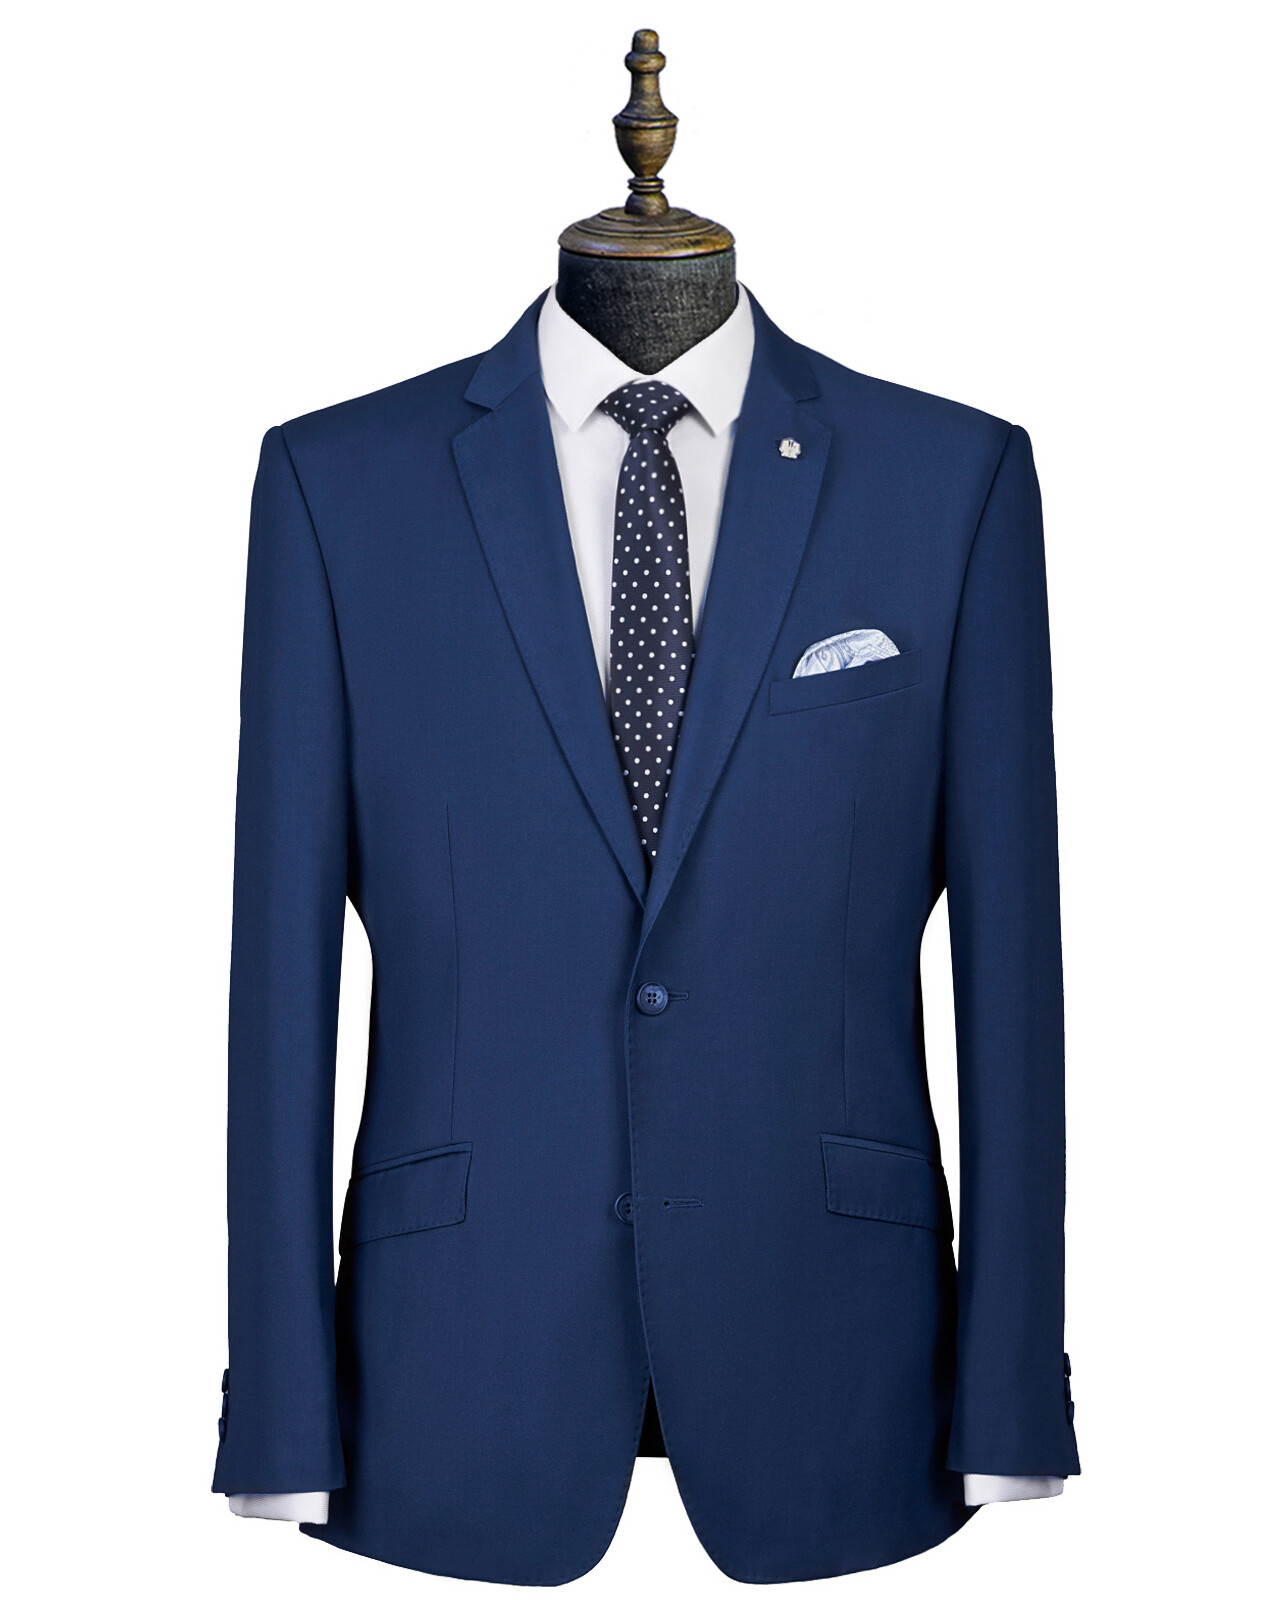 Christian-Brookes-Bond-Corn-Blue-15-Suit